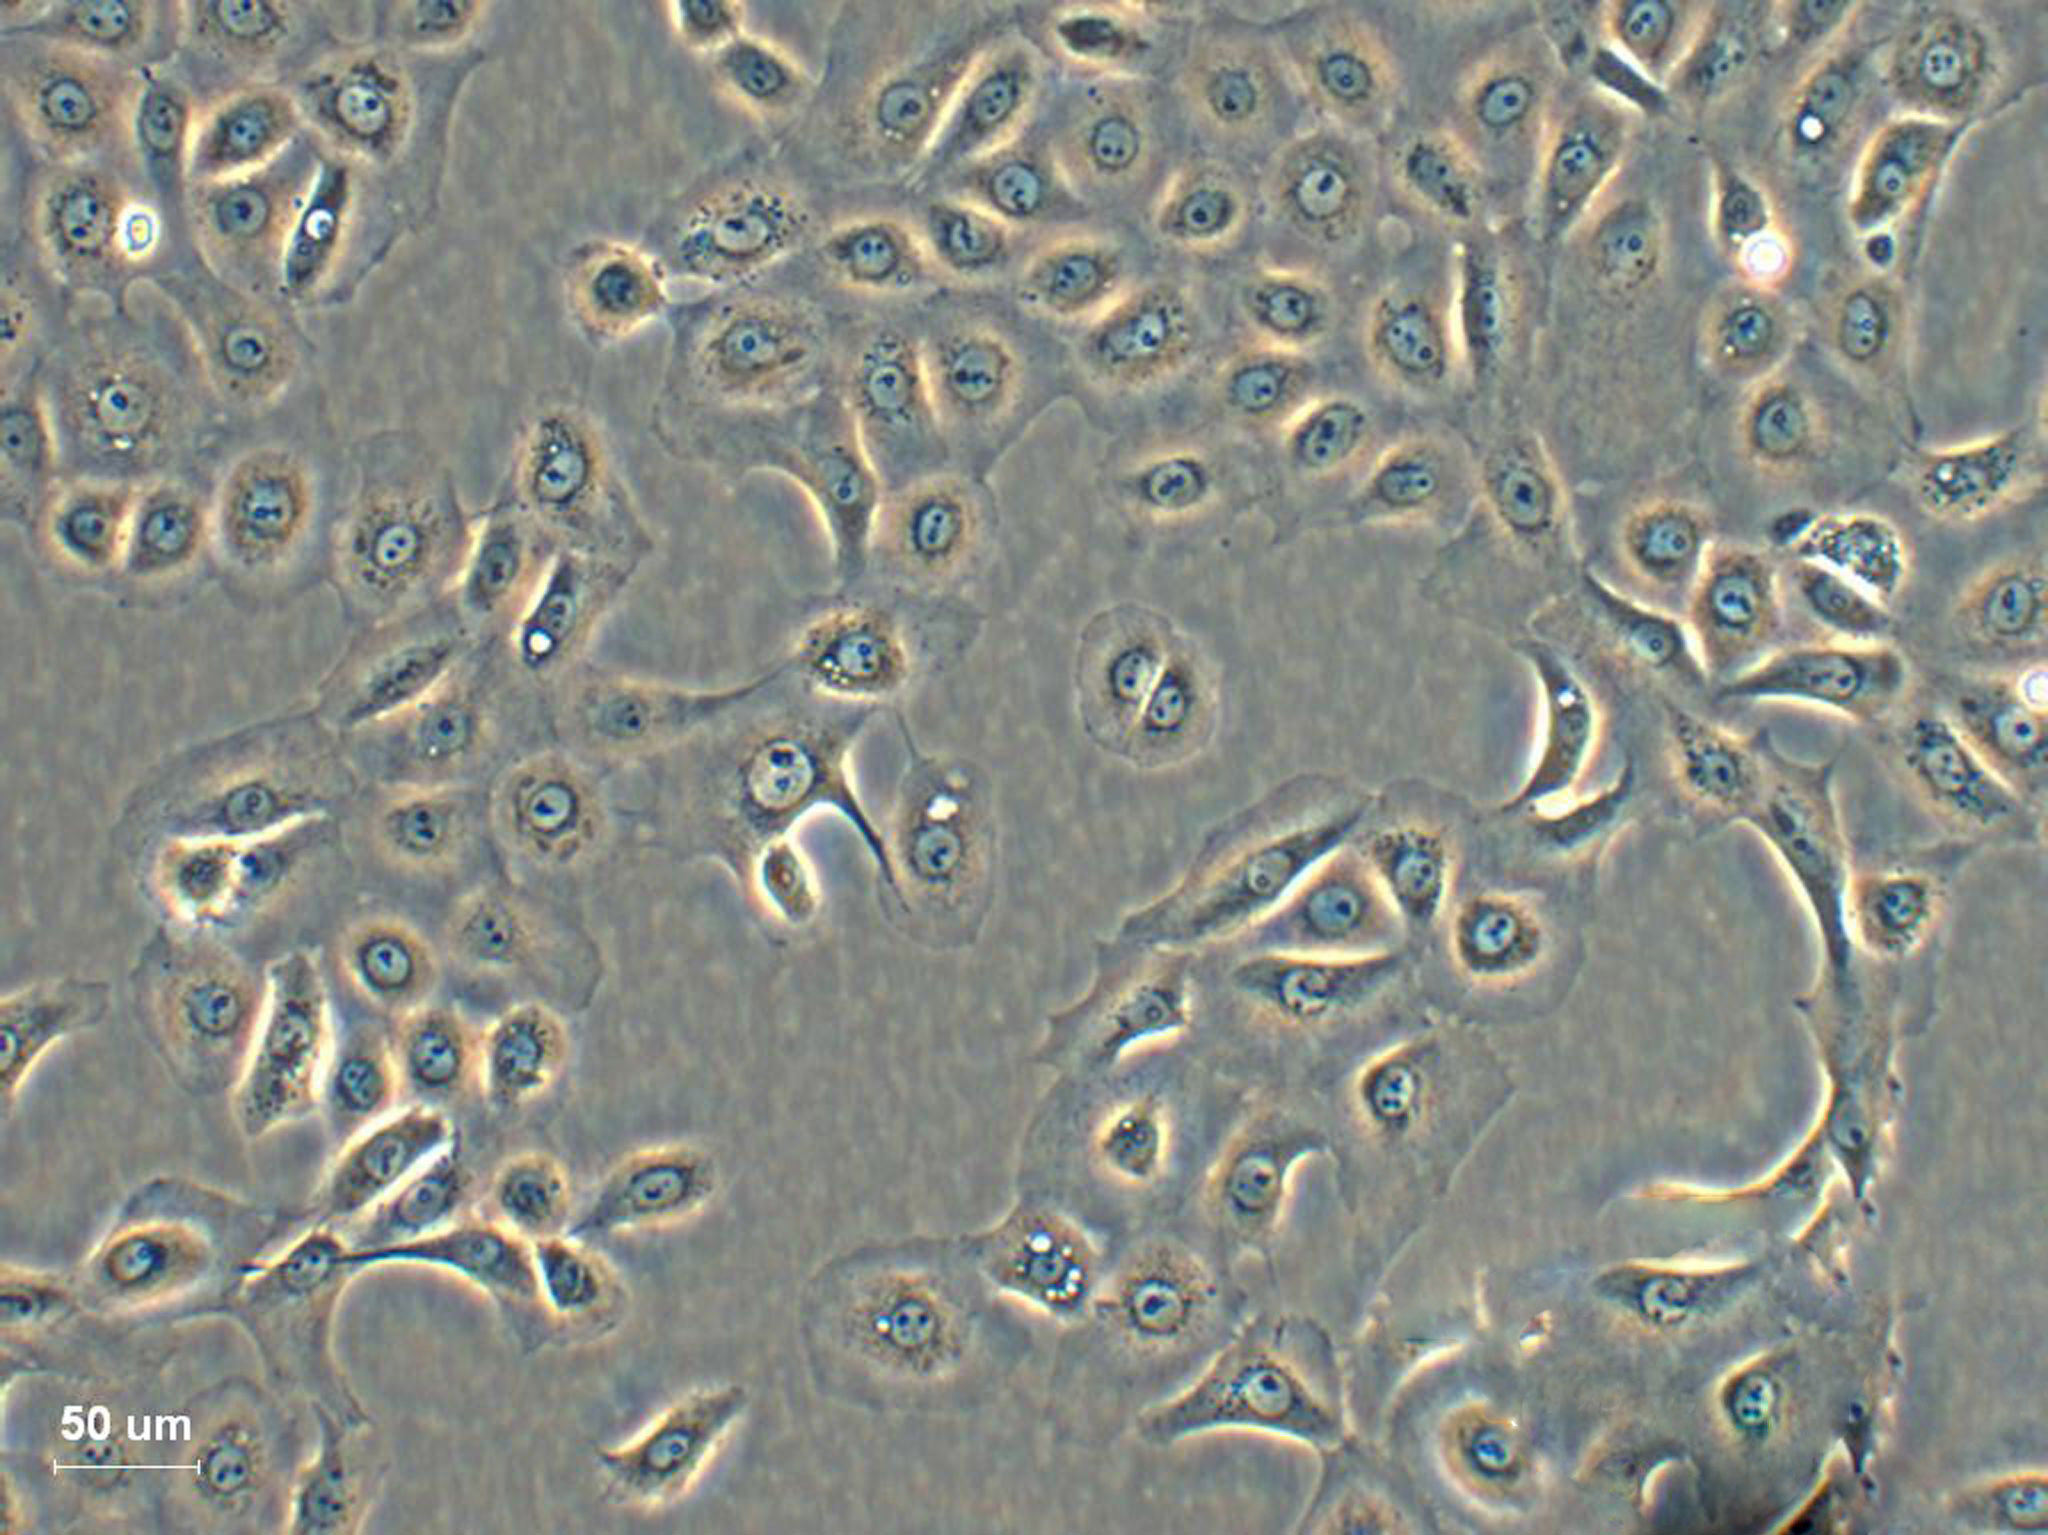 KE-39 epithelioid cells人胃癌细胞系